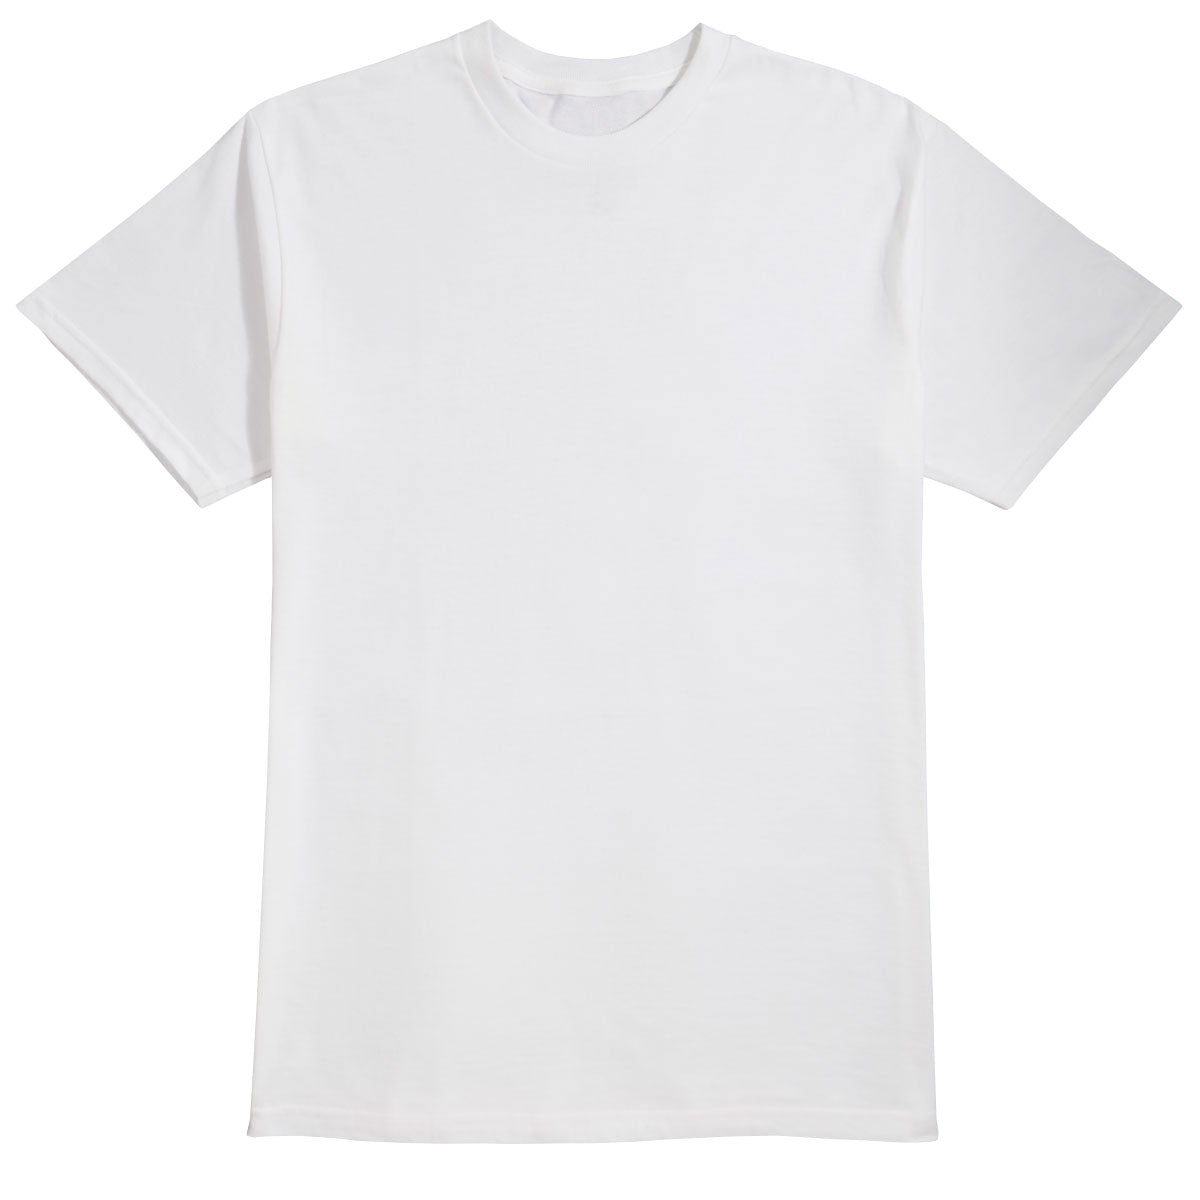 Alien Workshop Parenthesis Sticker T-Shirt - White - XL image 1